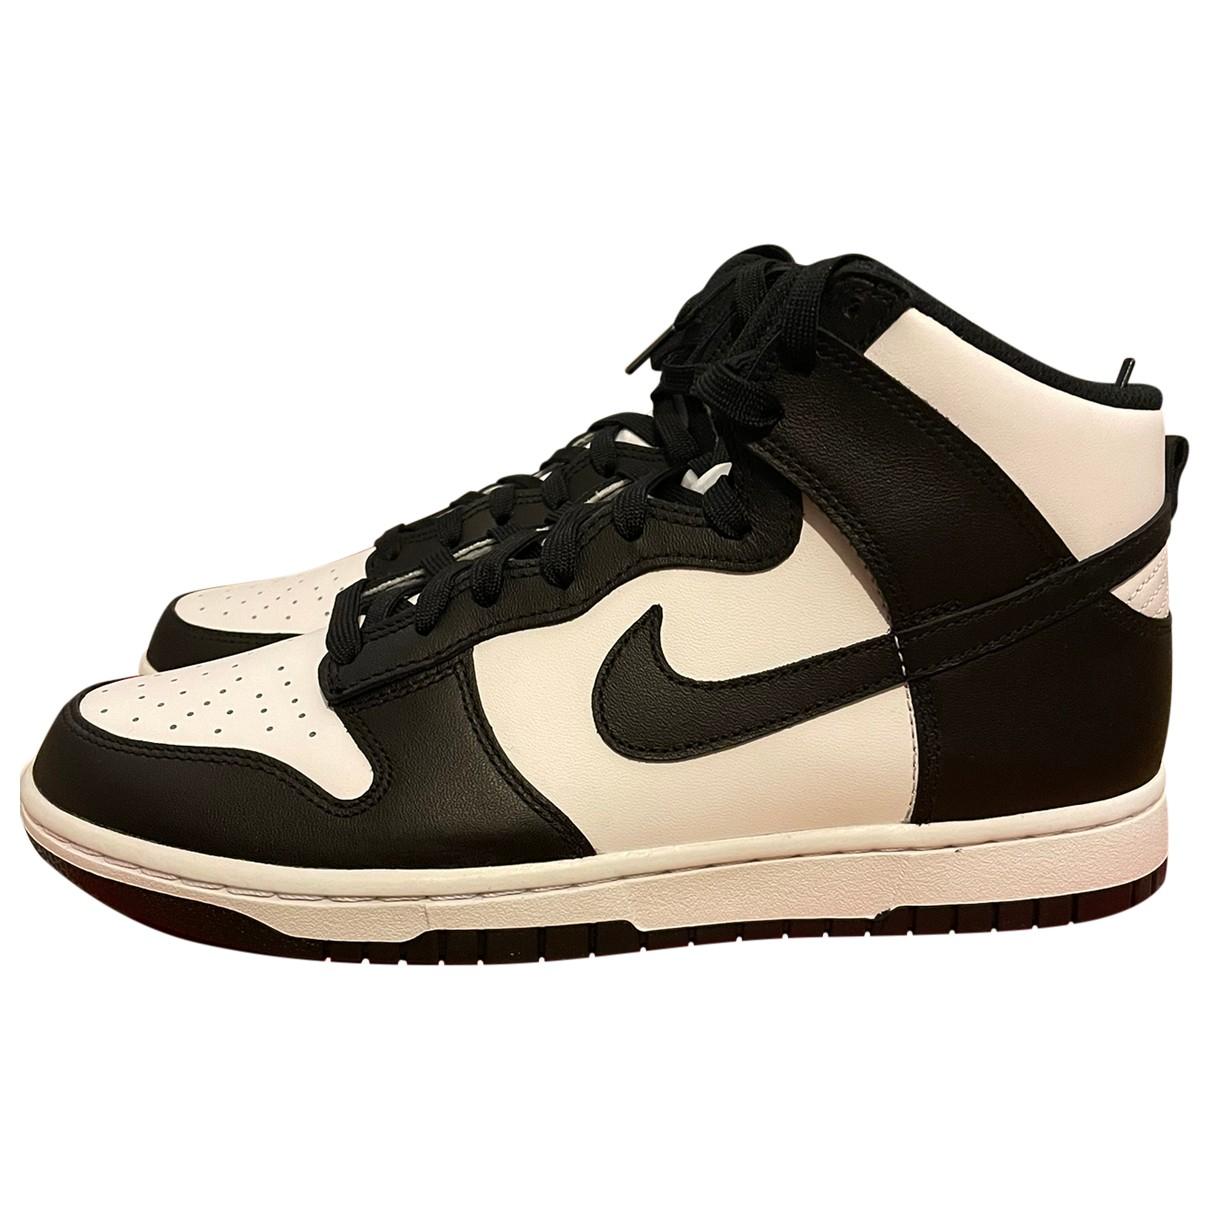 SB Dunk leather high trainers Nike